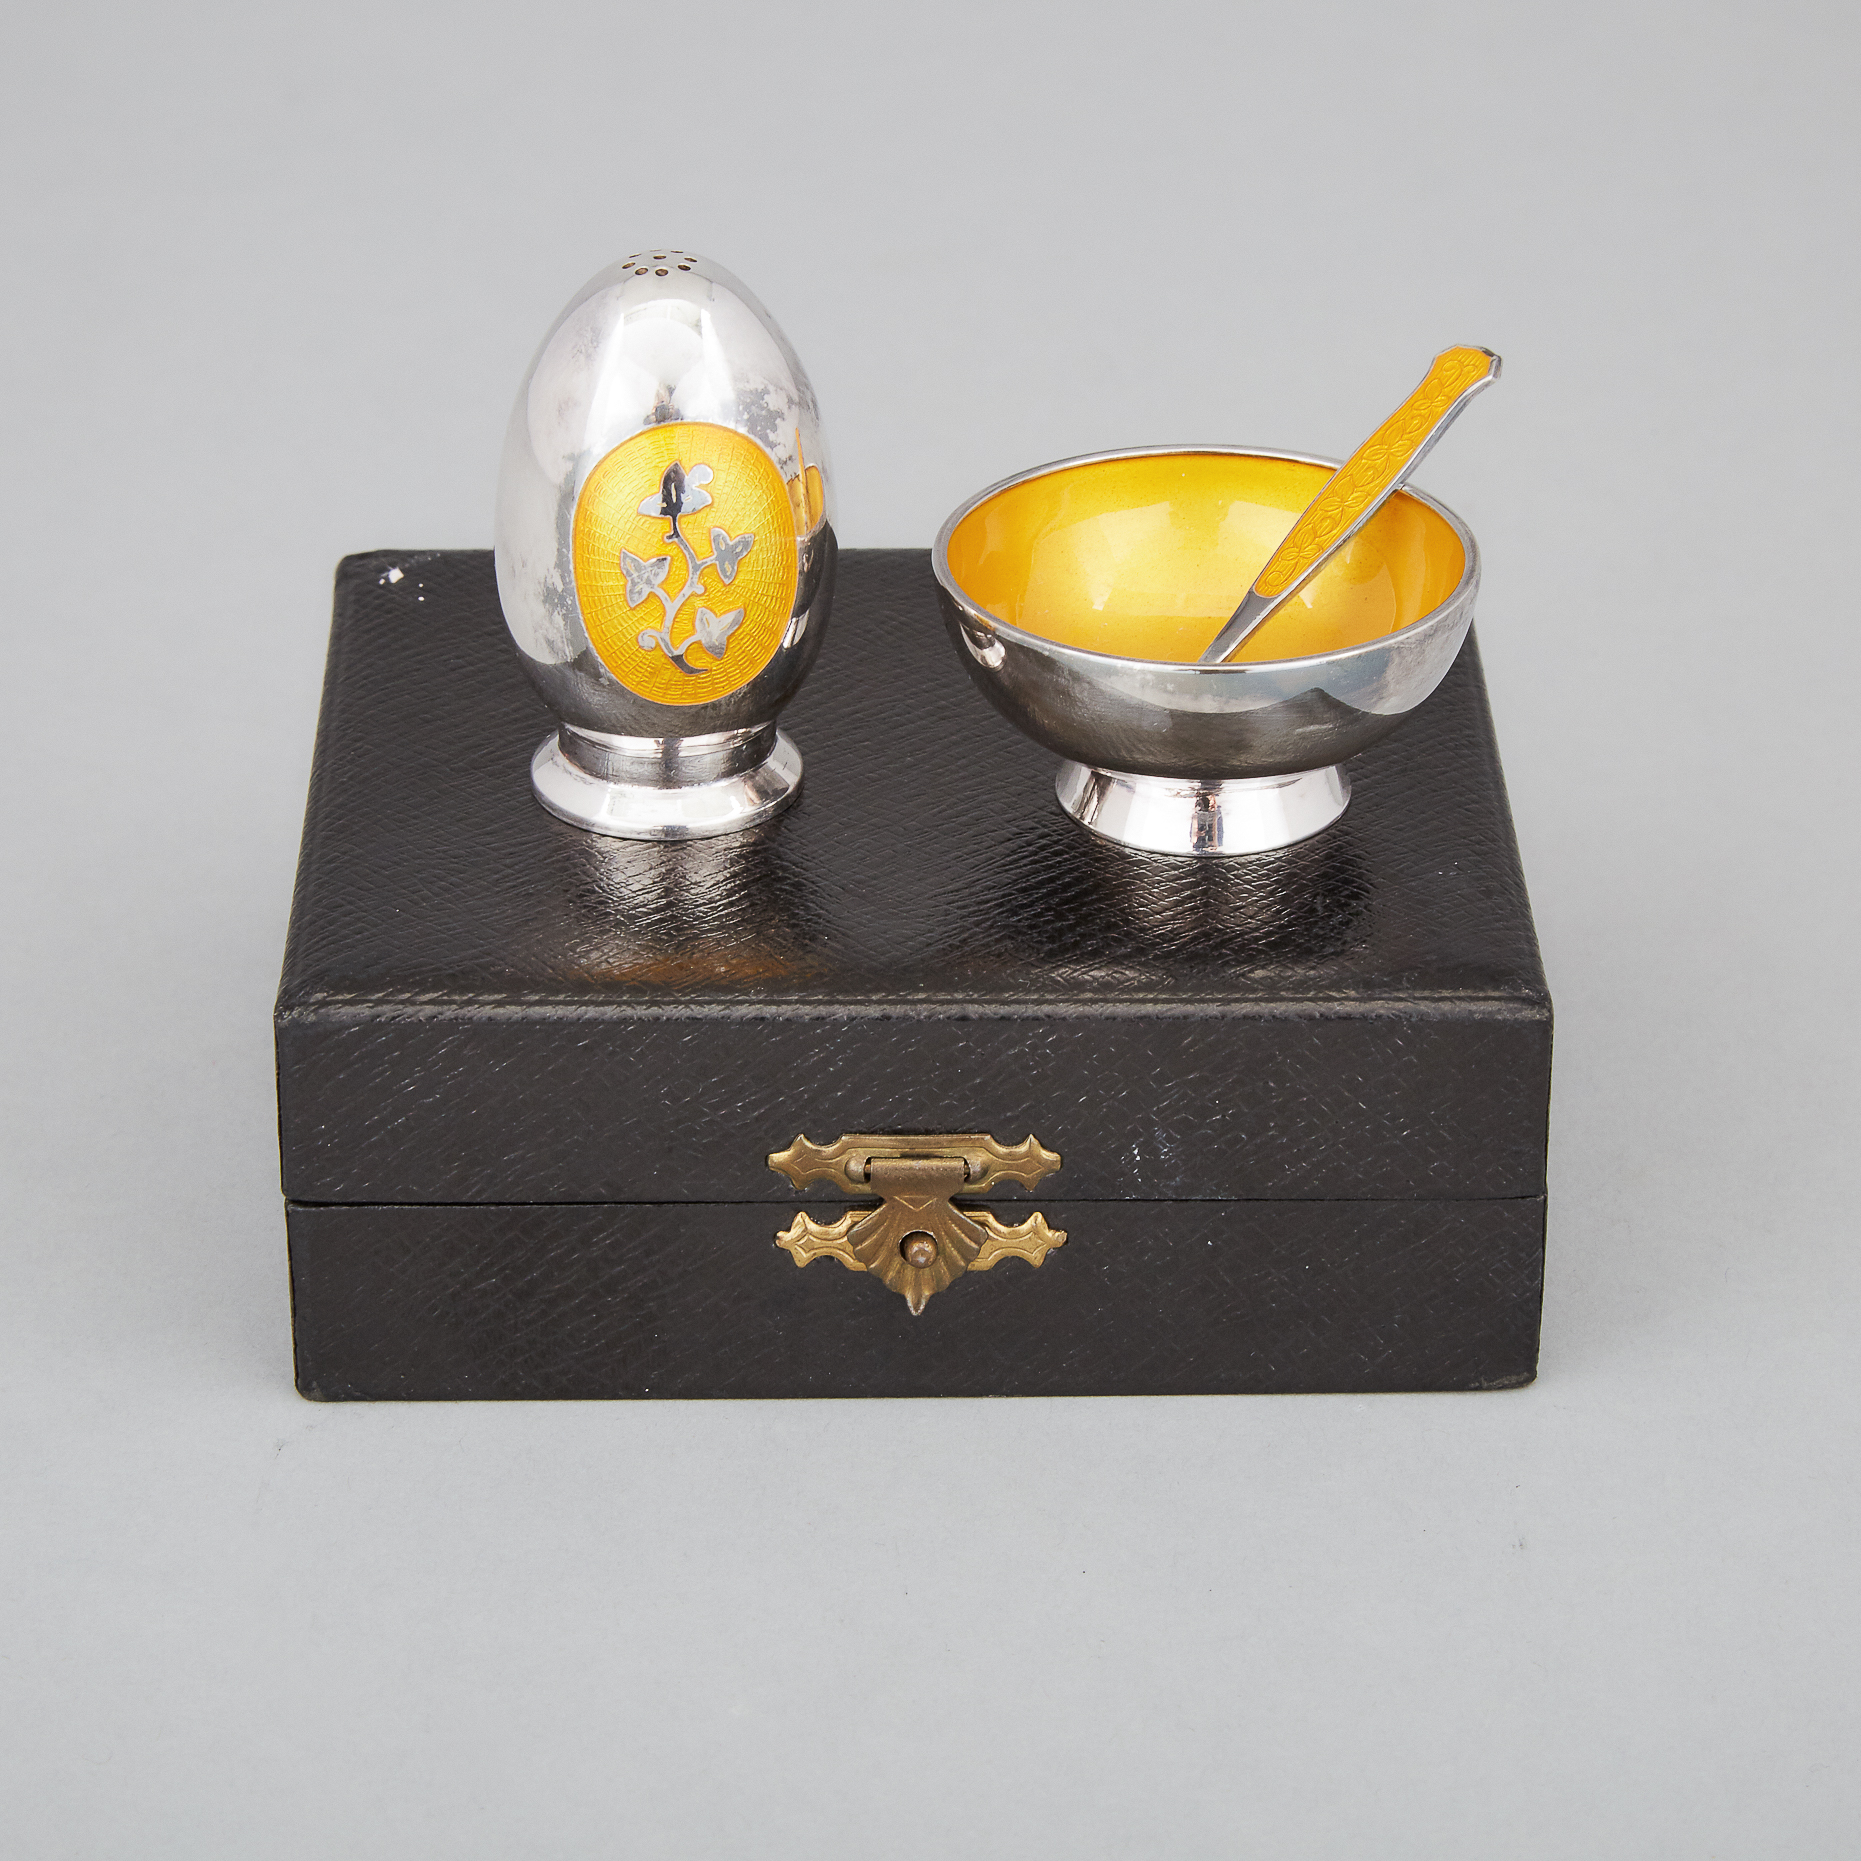 Danish Silver and Translucent Gold Enamel Pepper Caster and Salt Cellar with Spoon, Meka Reklamegaver, Copenhagen, c.1970